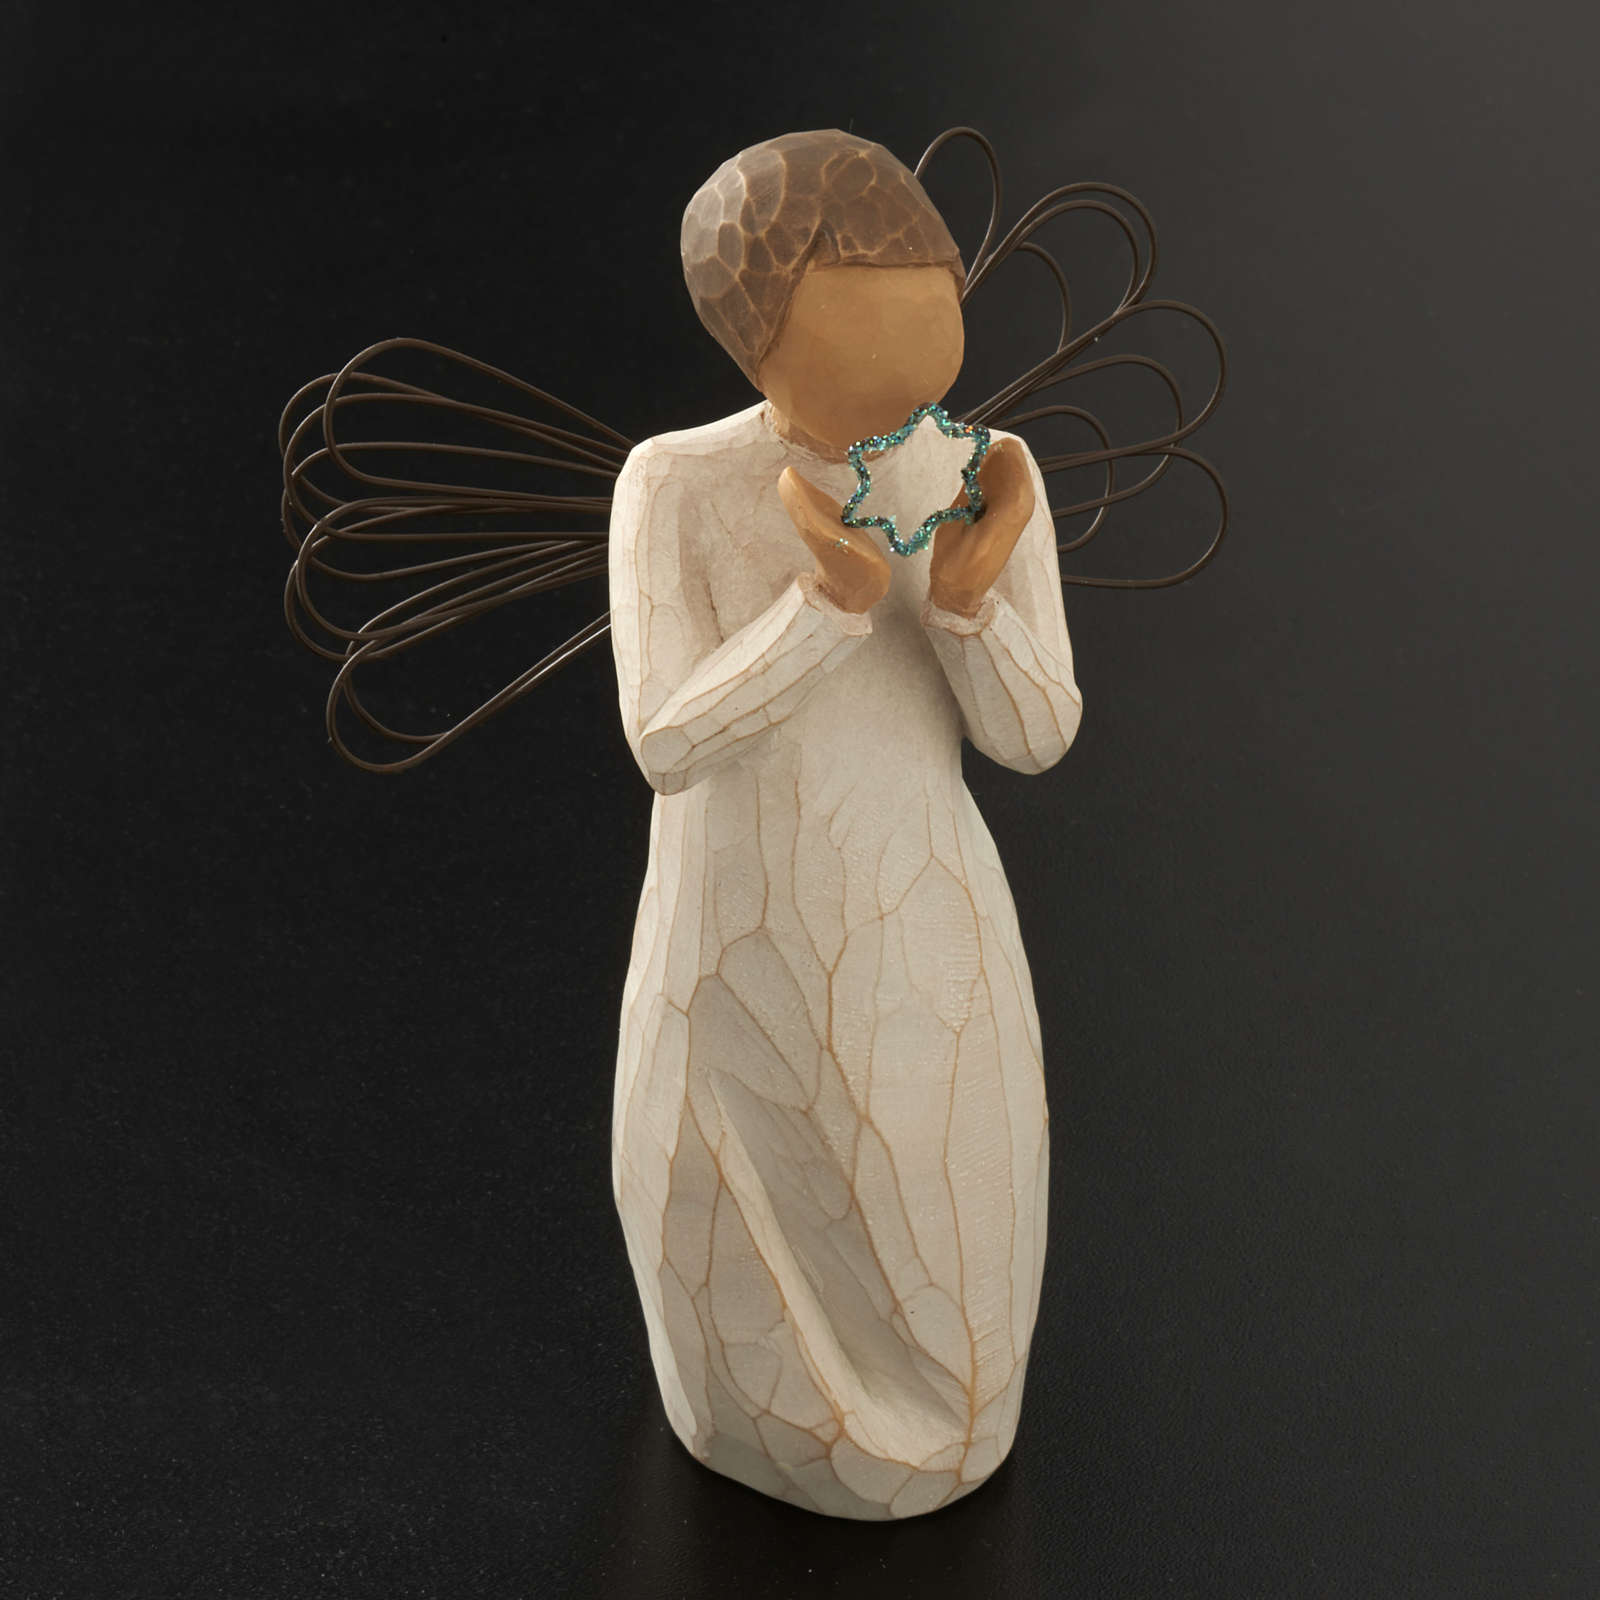 Willow Tree figurine Bright Star online sales on HOLYART.co.uk